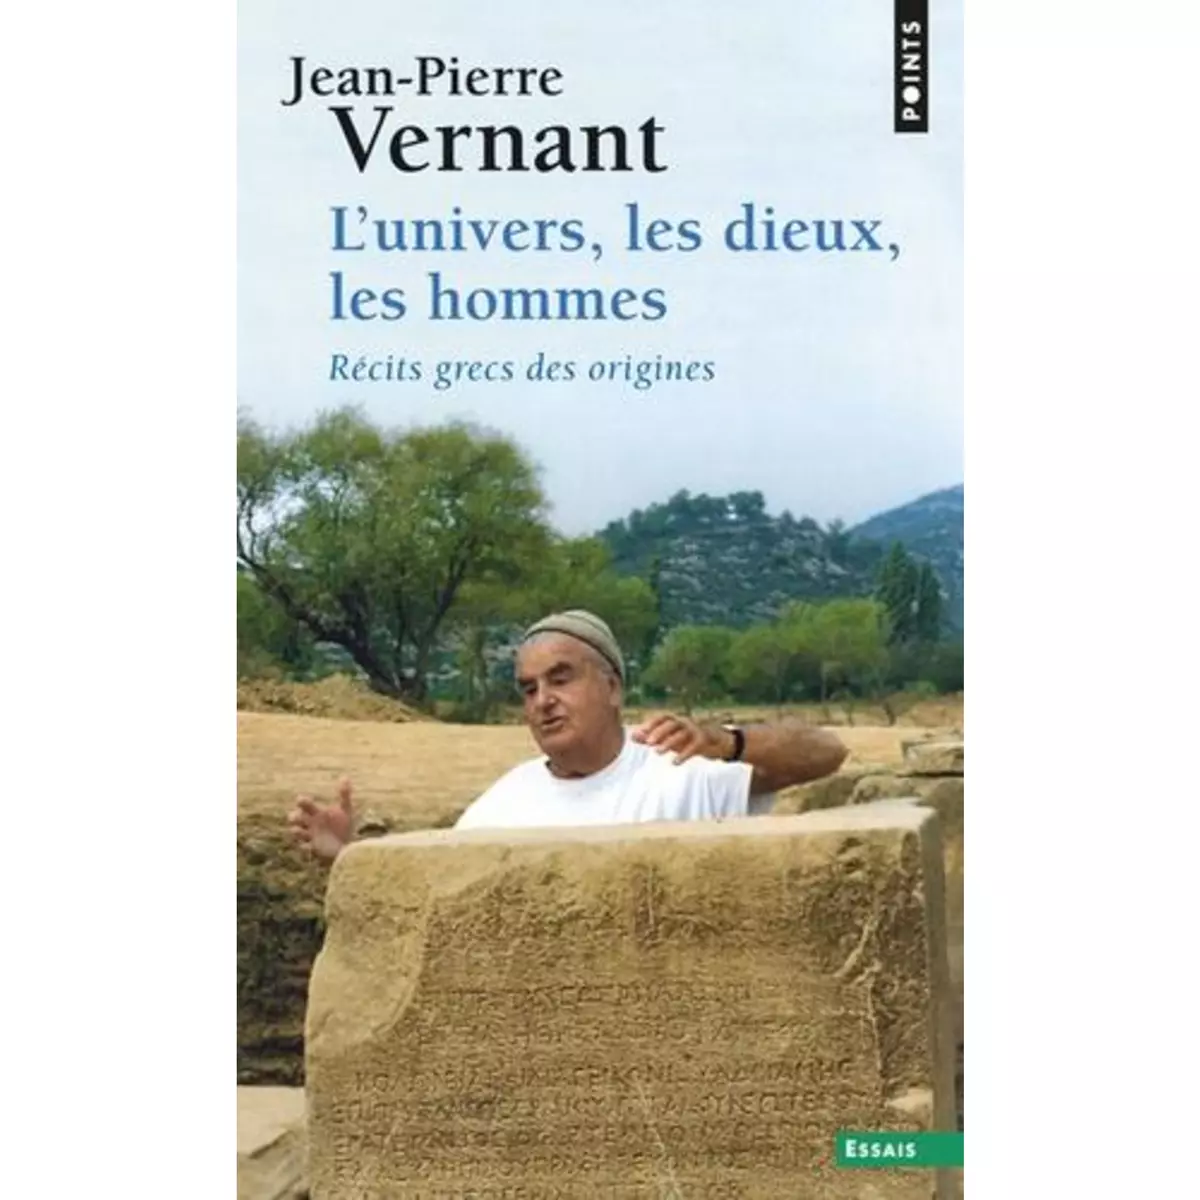  L'UNIVERS, LES DIEUX, LES HOMMES. RECITS GRECS DES ORIGINES, Vernant Jean-Pierre